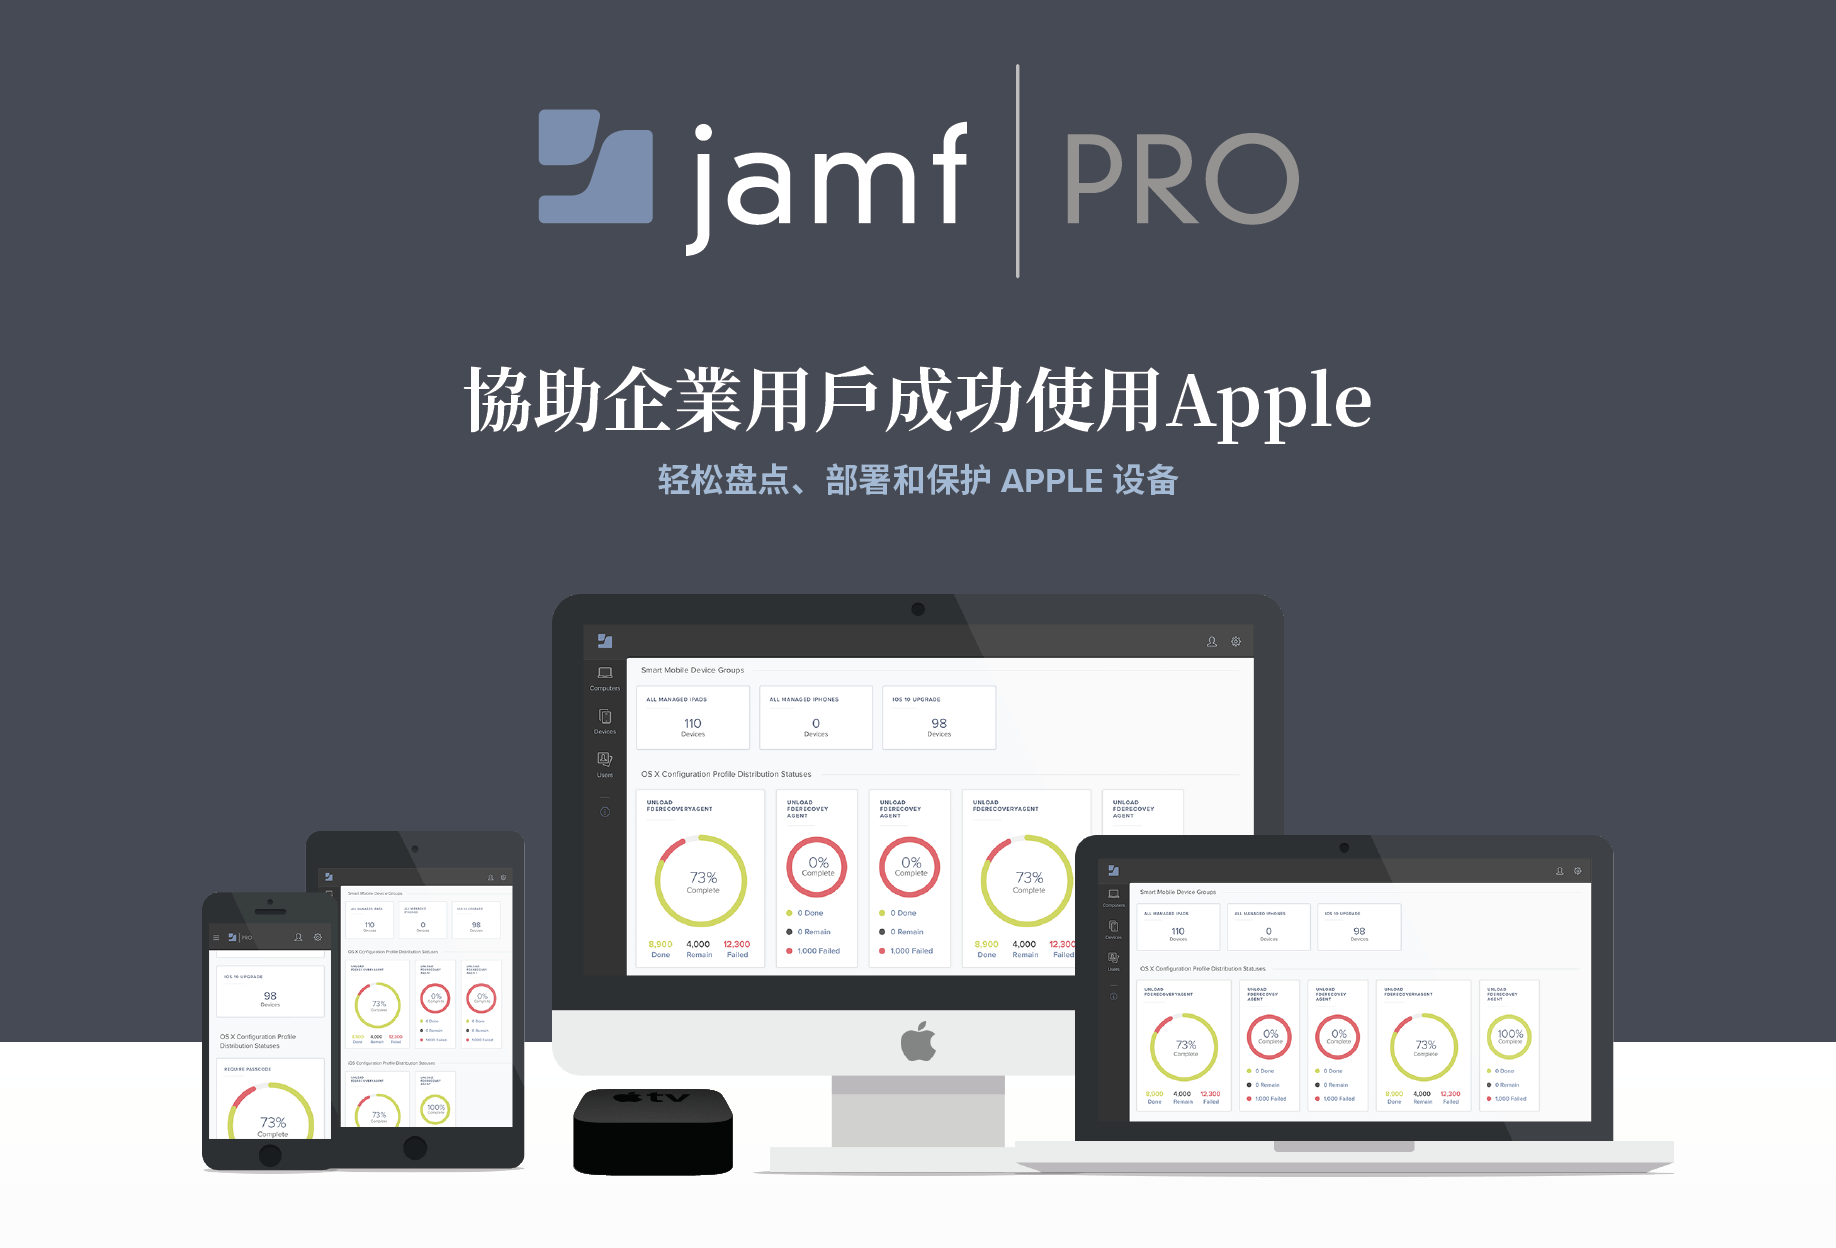 jamf pro patch management